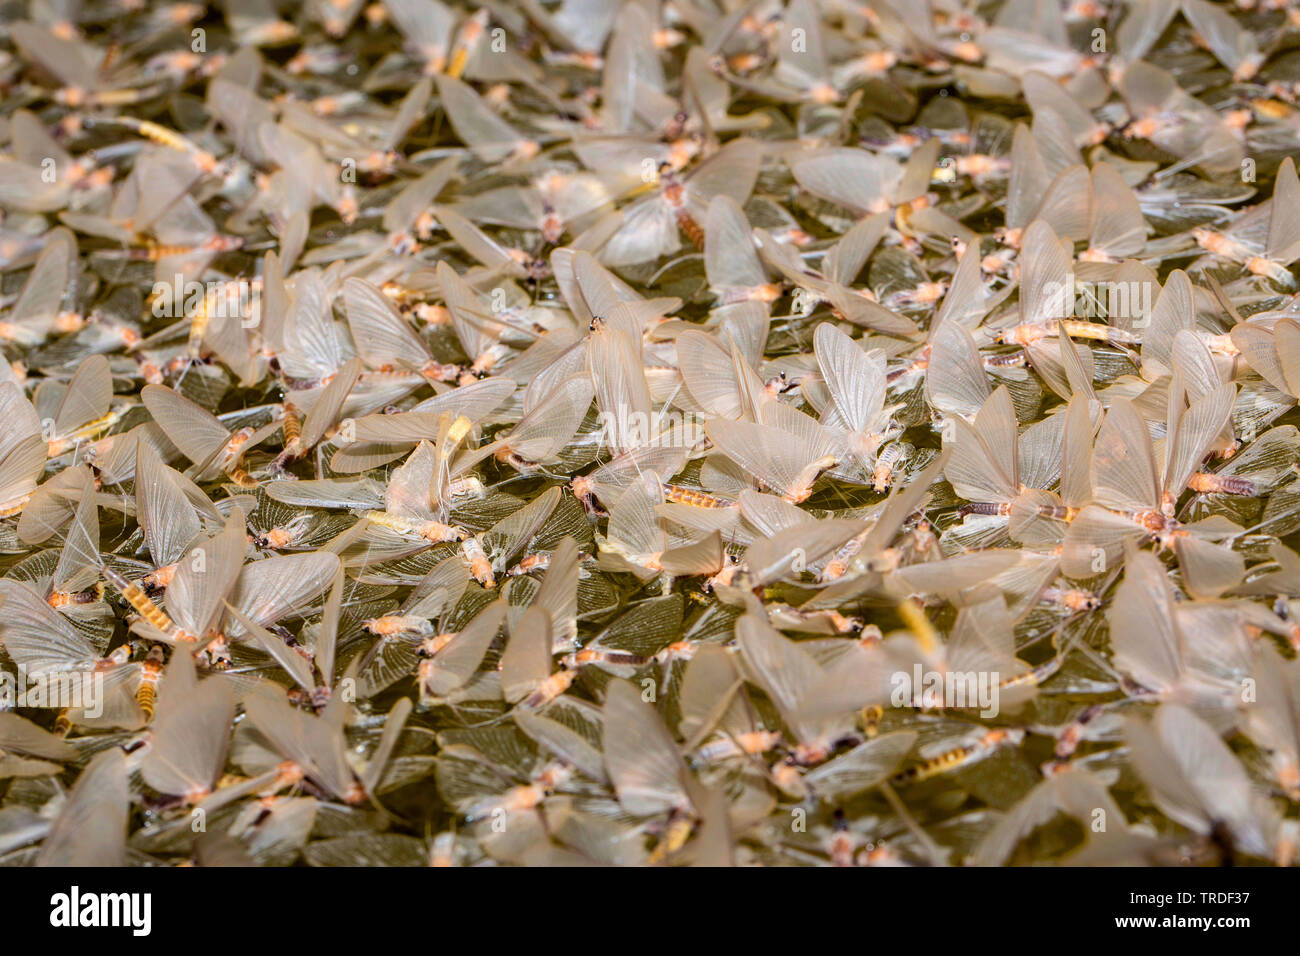 Vergine mayfly (Ephoron virgo, Polymitarcis virgo), un sacco di femmine con uova traslucido drifting sulla superficie dell'acqua, in Germania, in Baviera Foto Stock